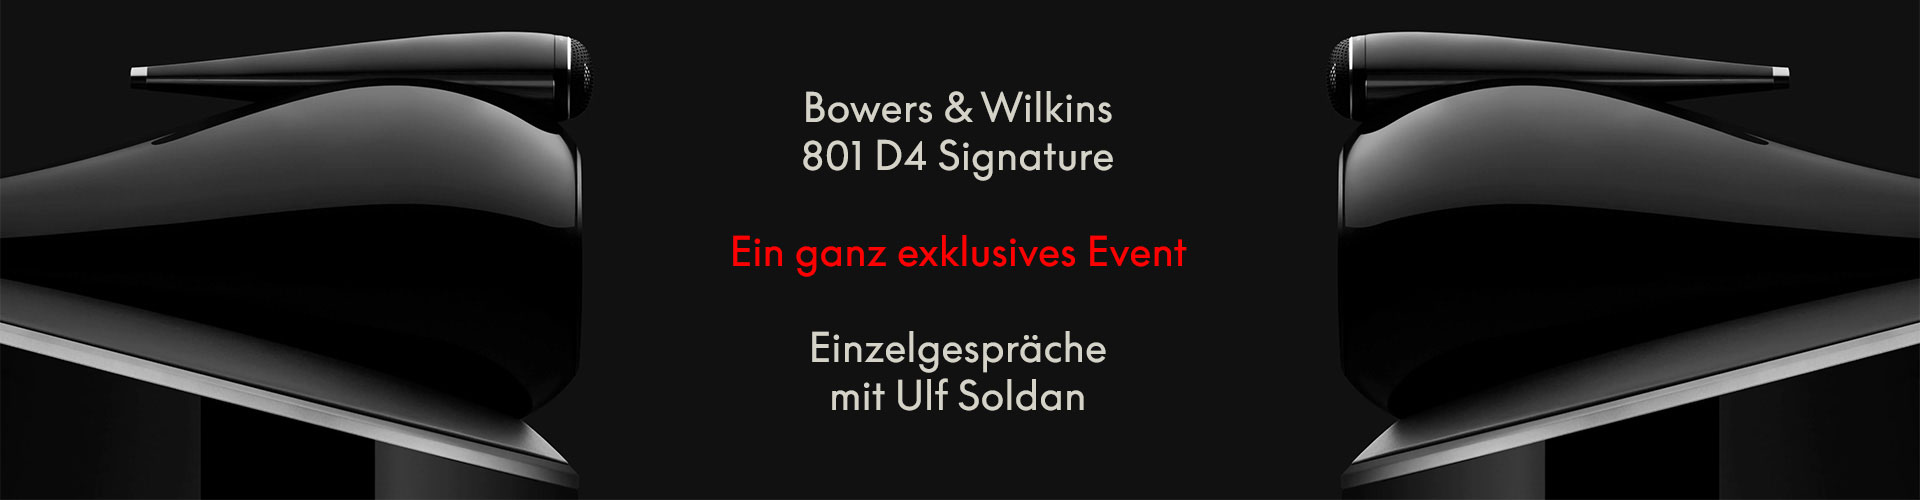 Ulf soldan stellt vor: Die 801 D4 Signature